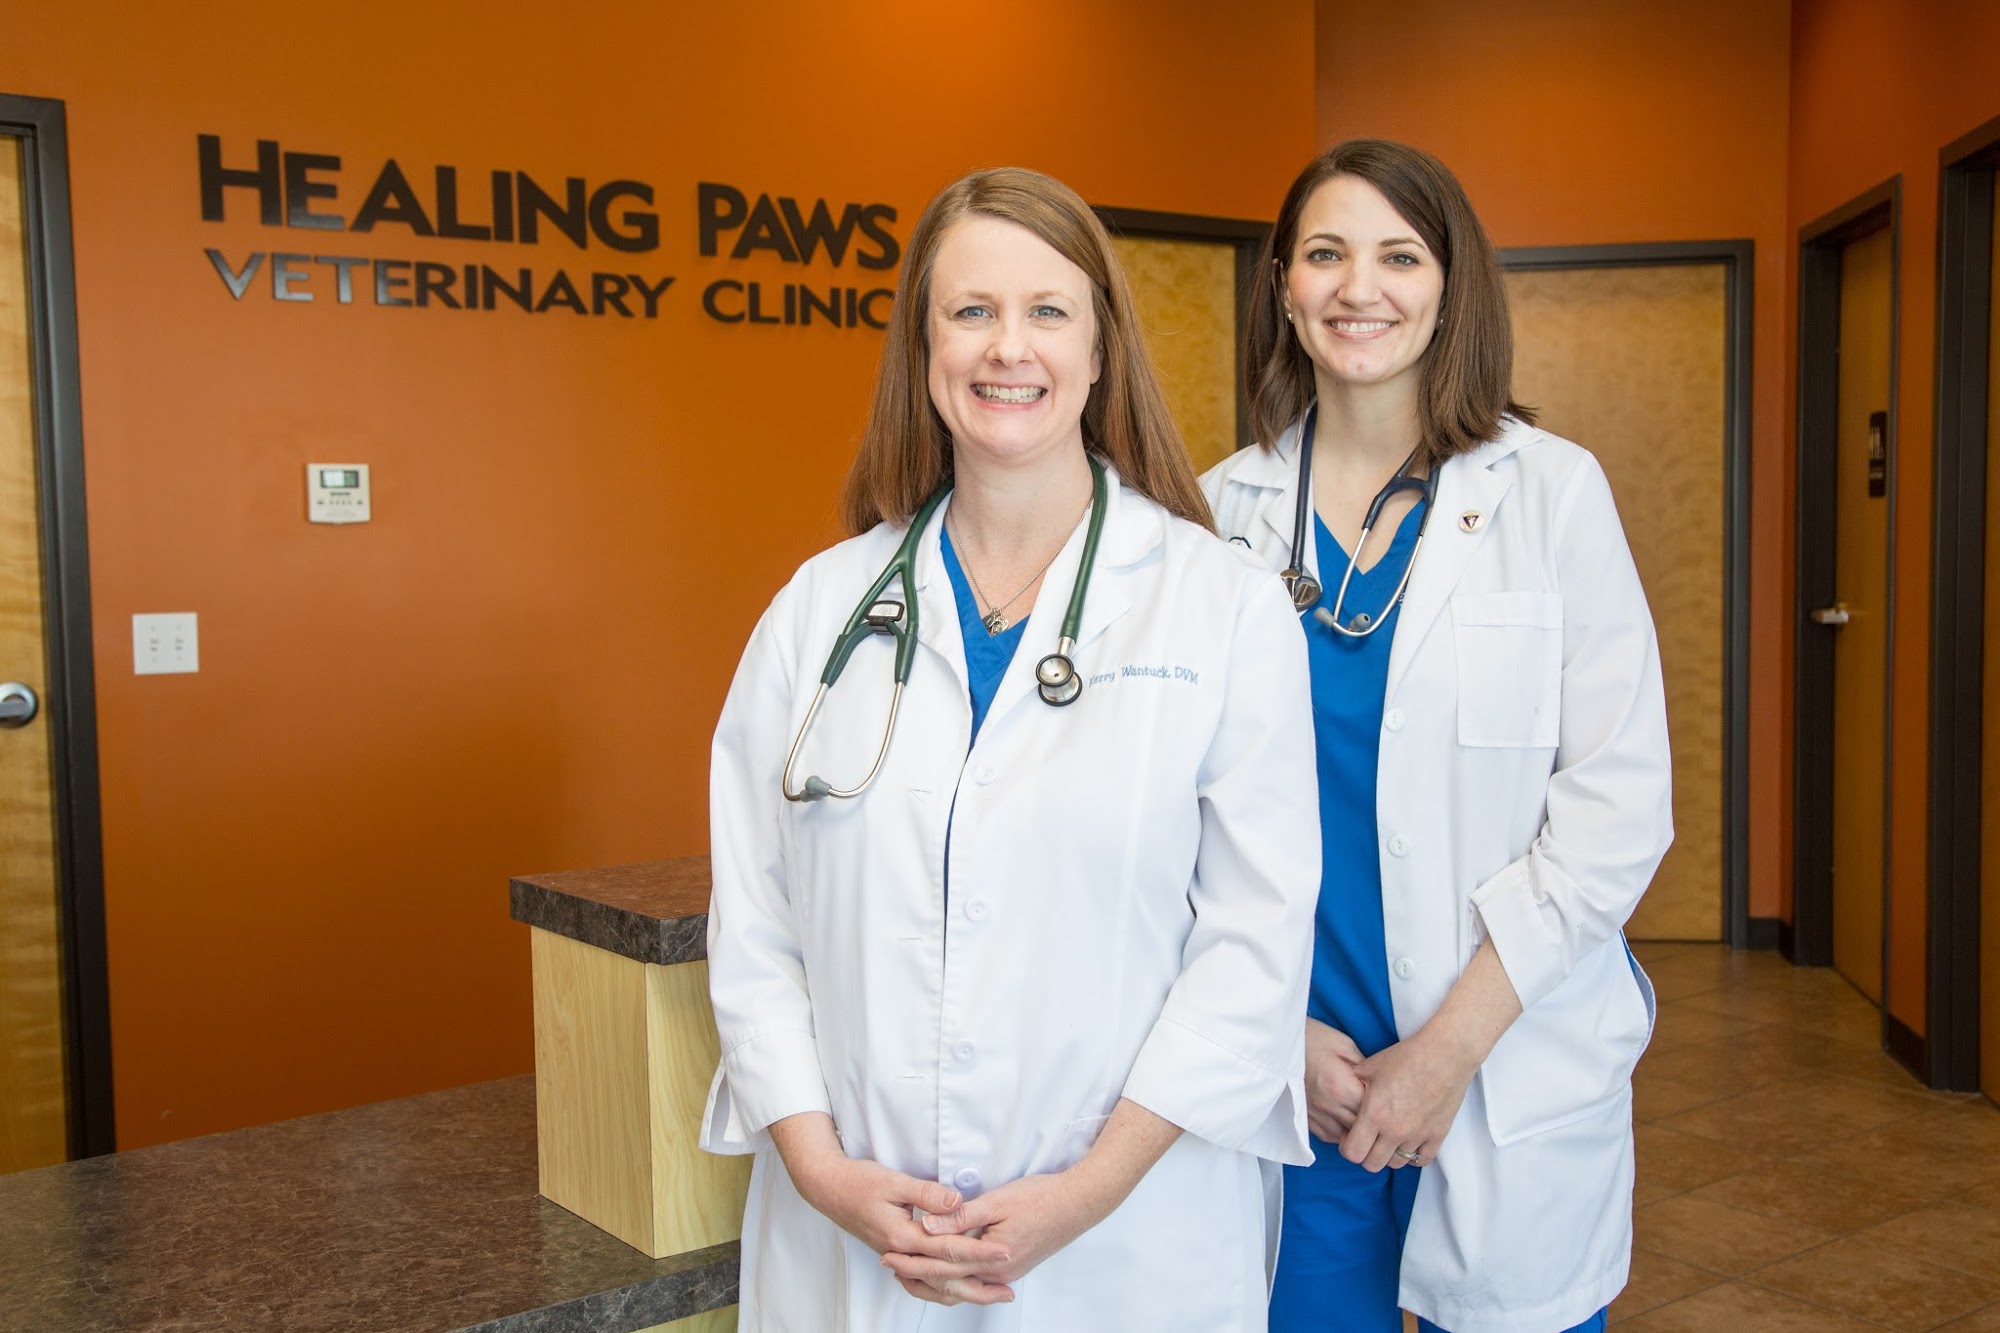 Healing Paws Veterinary Clinic